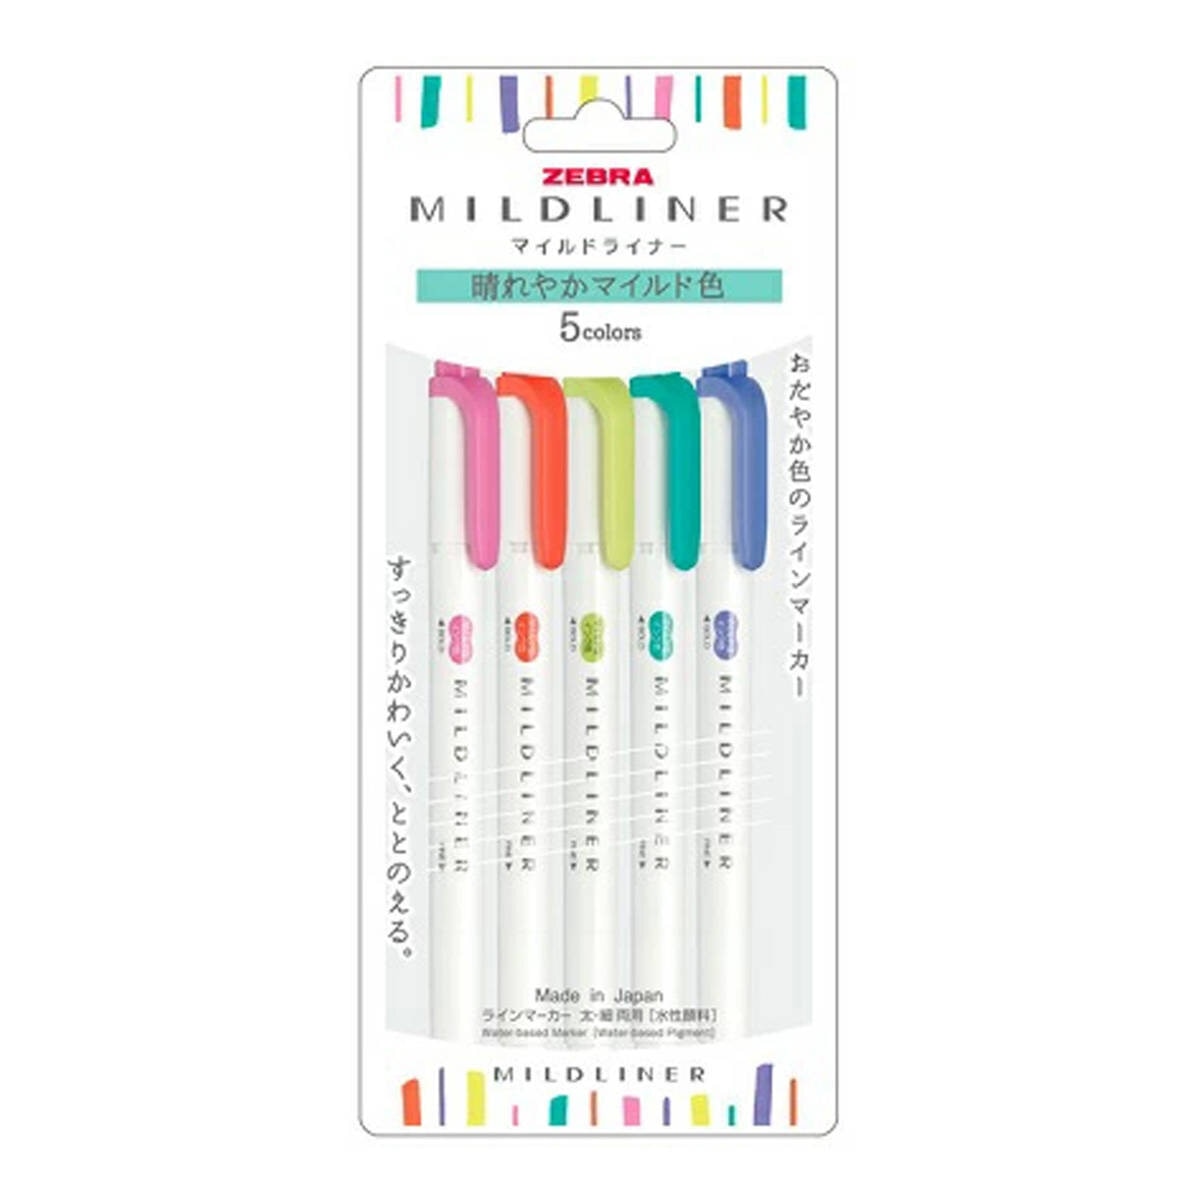 Zebra Mildliner 雙頭柔性螢光筆 5色組 X 4入多種顏色選擇